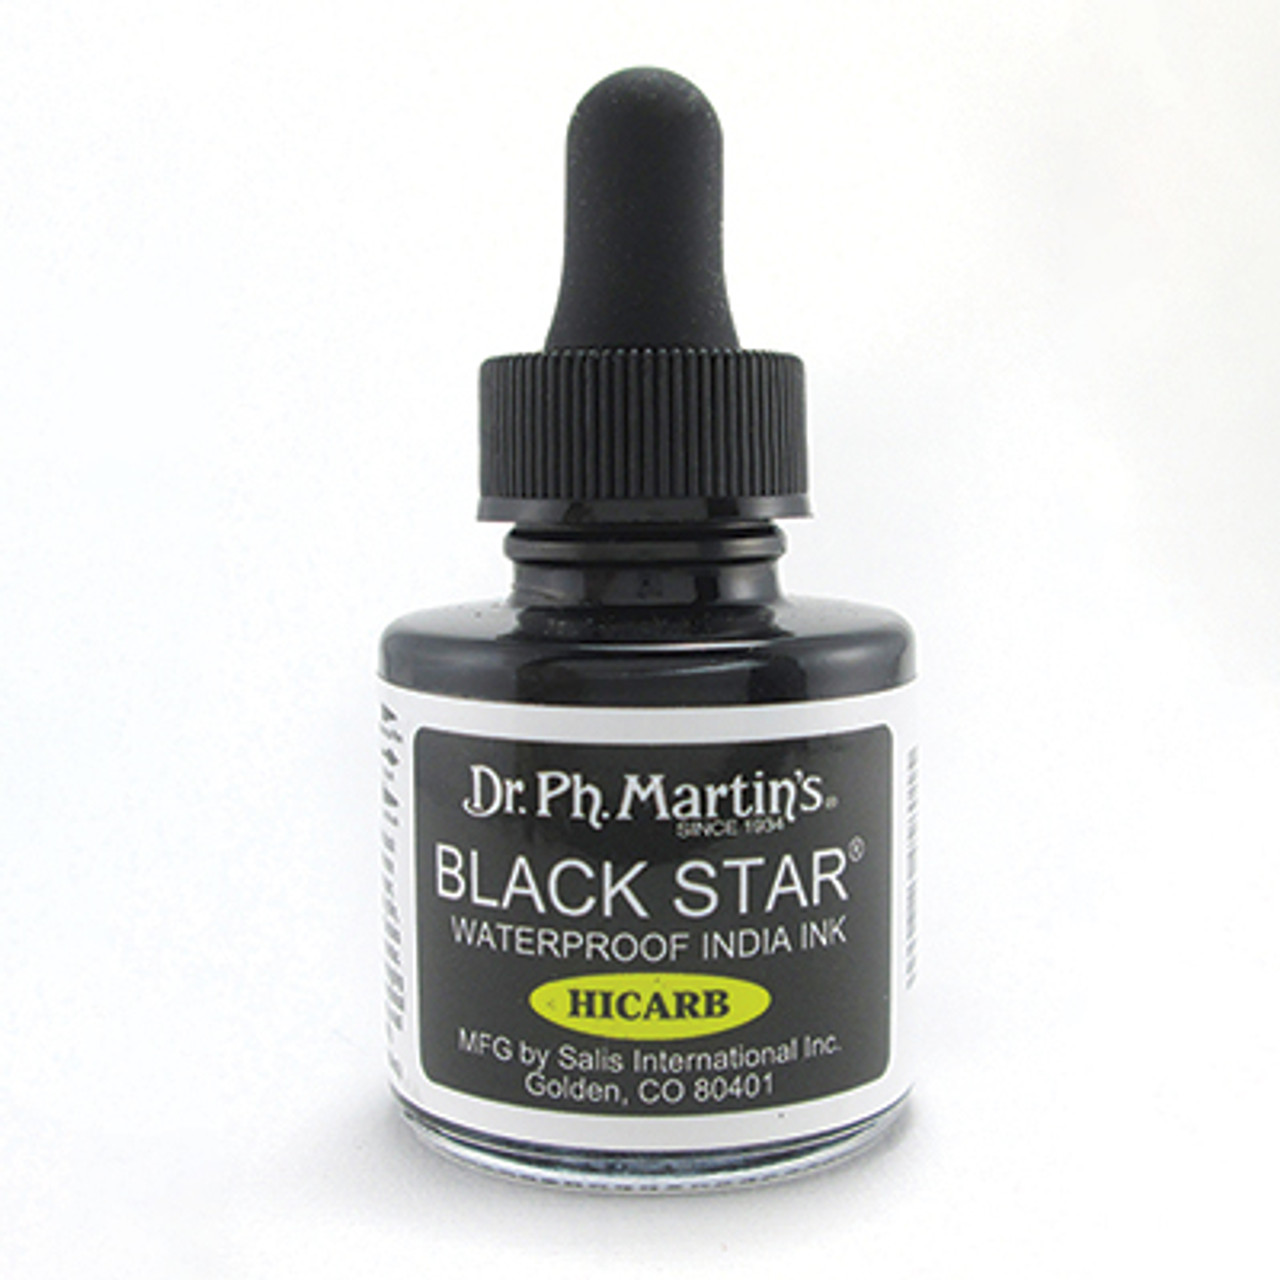 Dr. Ph. Martin's Black Star India Ink - Hi-Carb